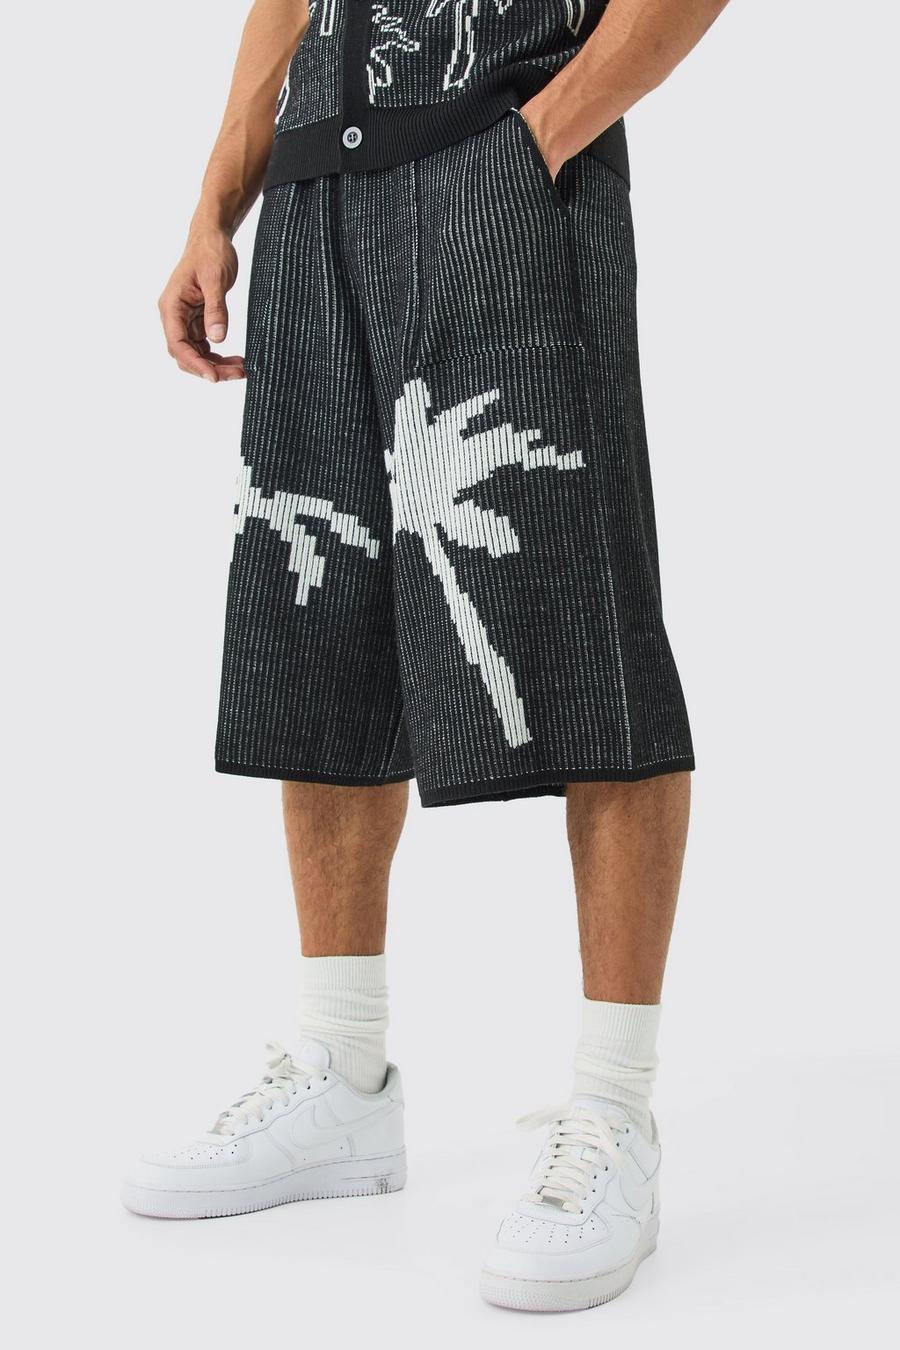 Black Palm Jacquard Ribbed Knitted Jort